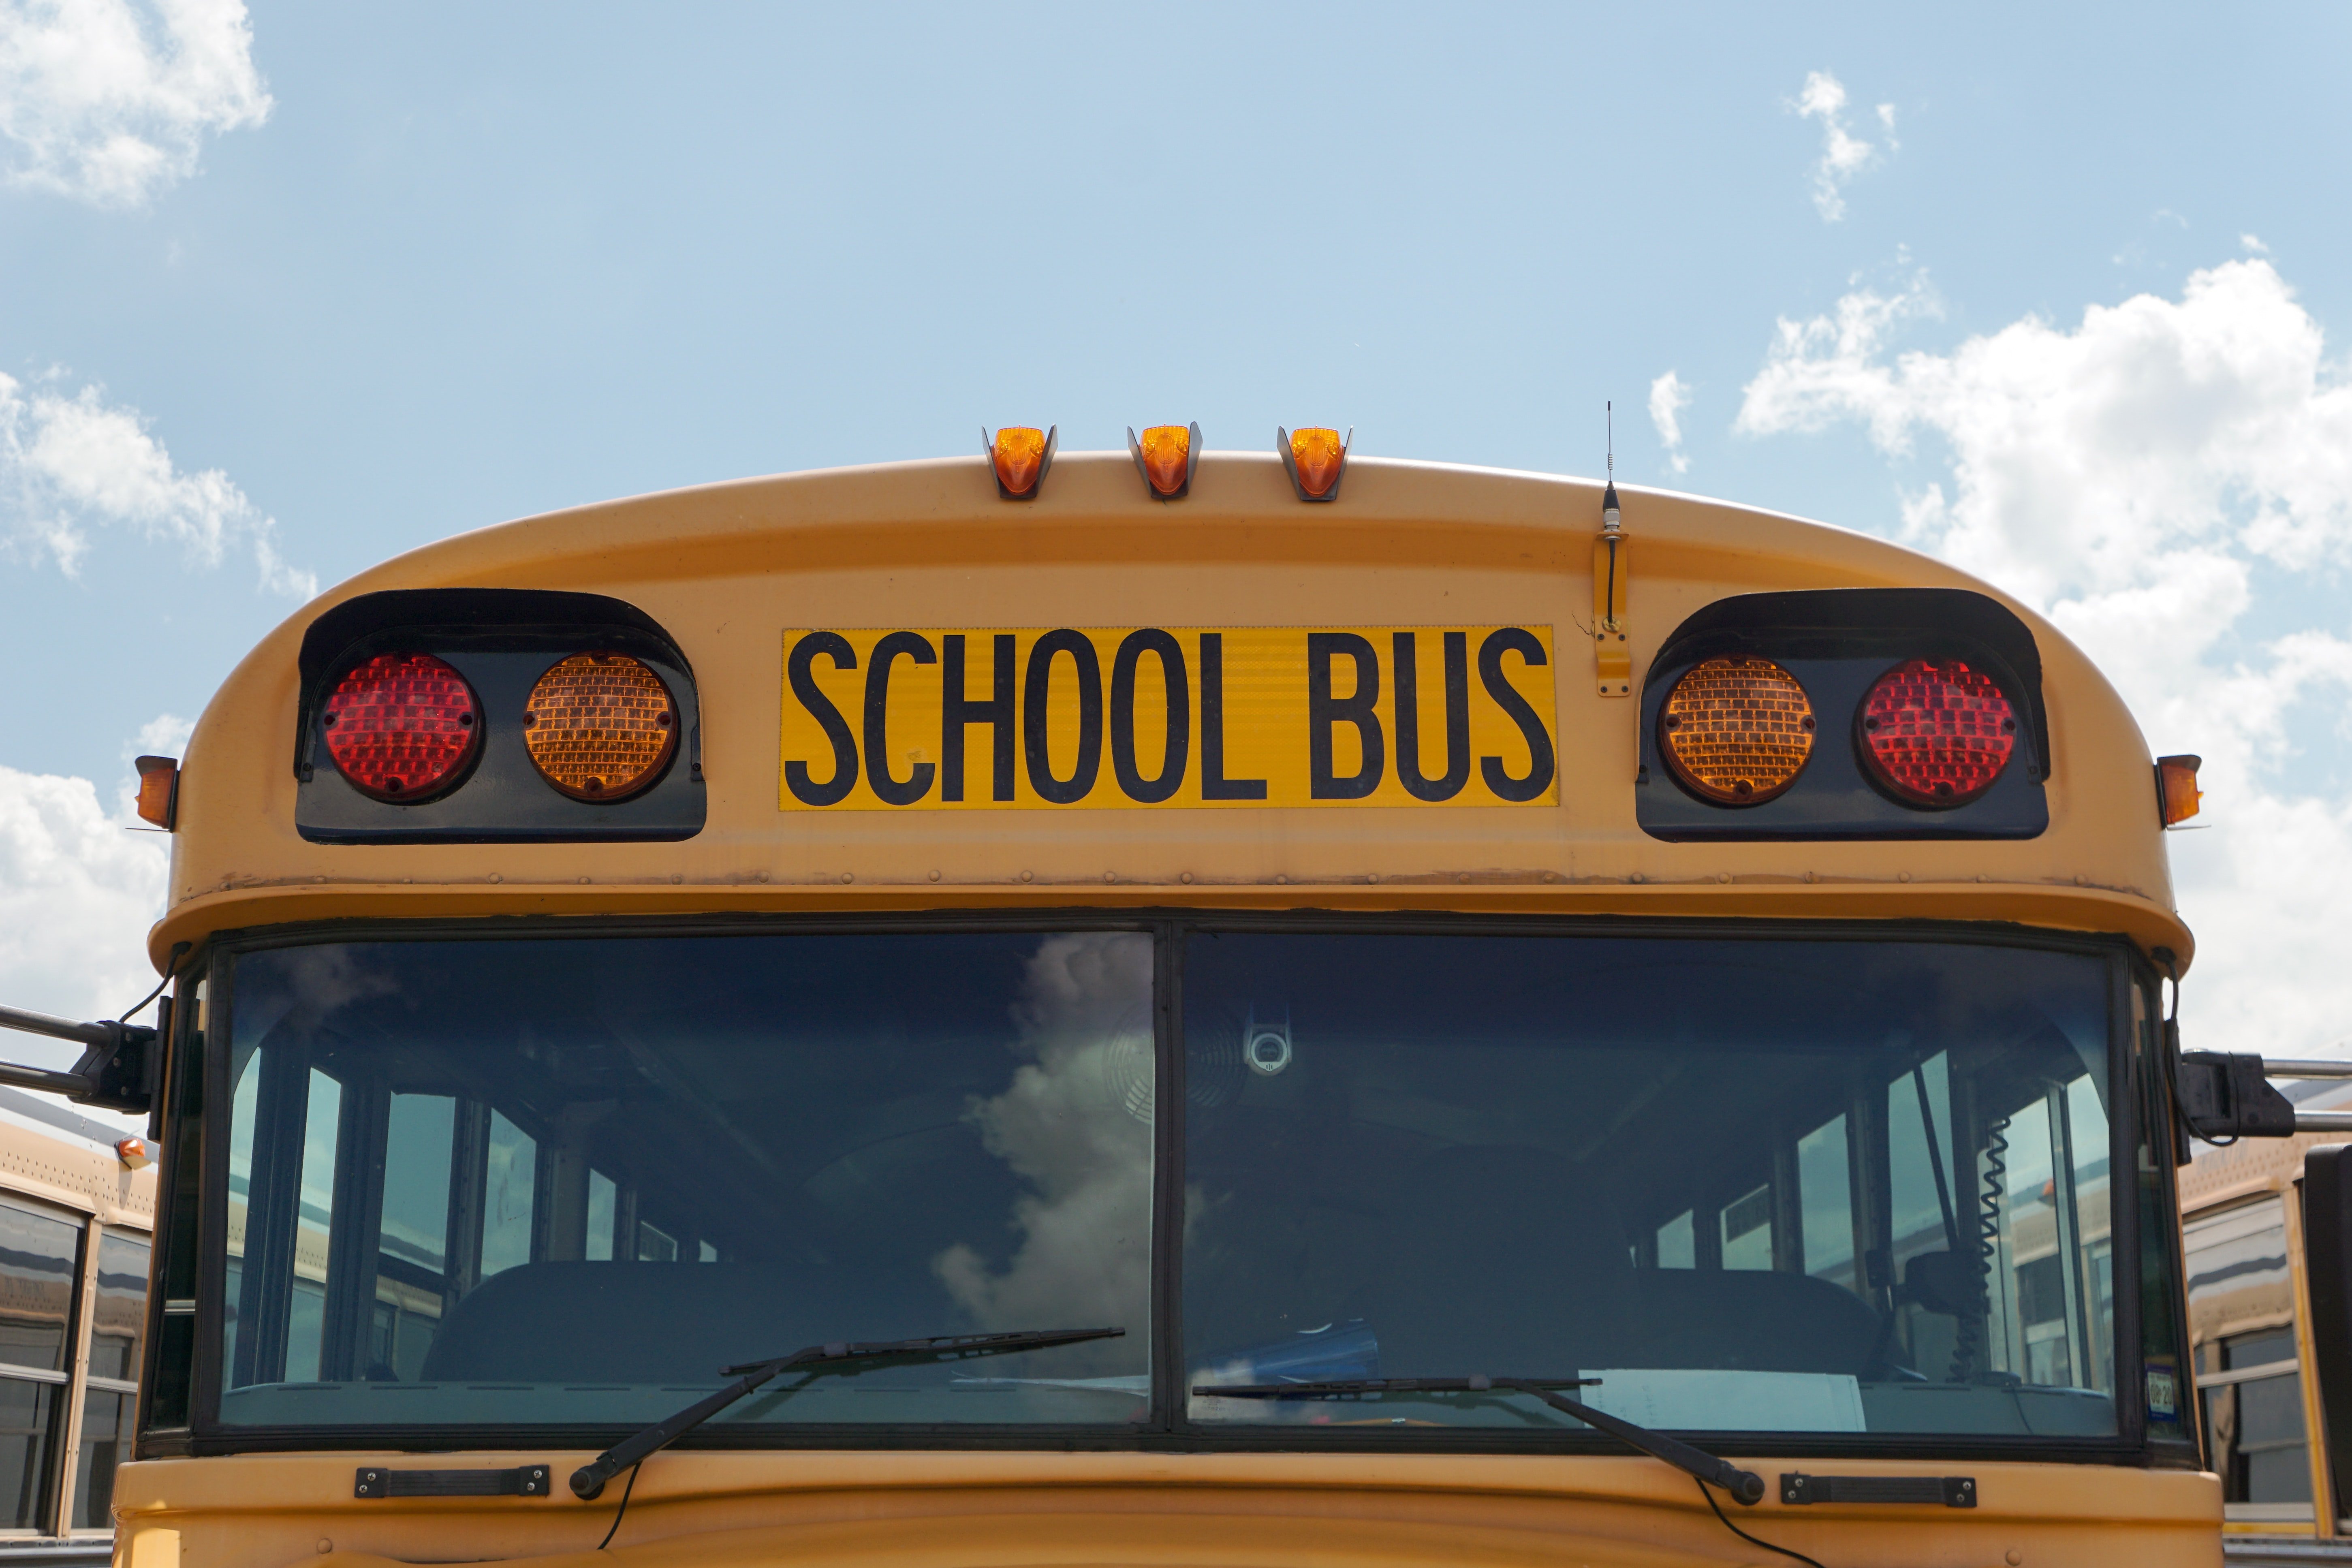 Justin started taking the school bus. | Source: Unsplash